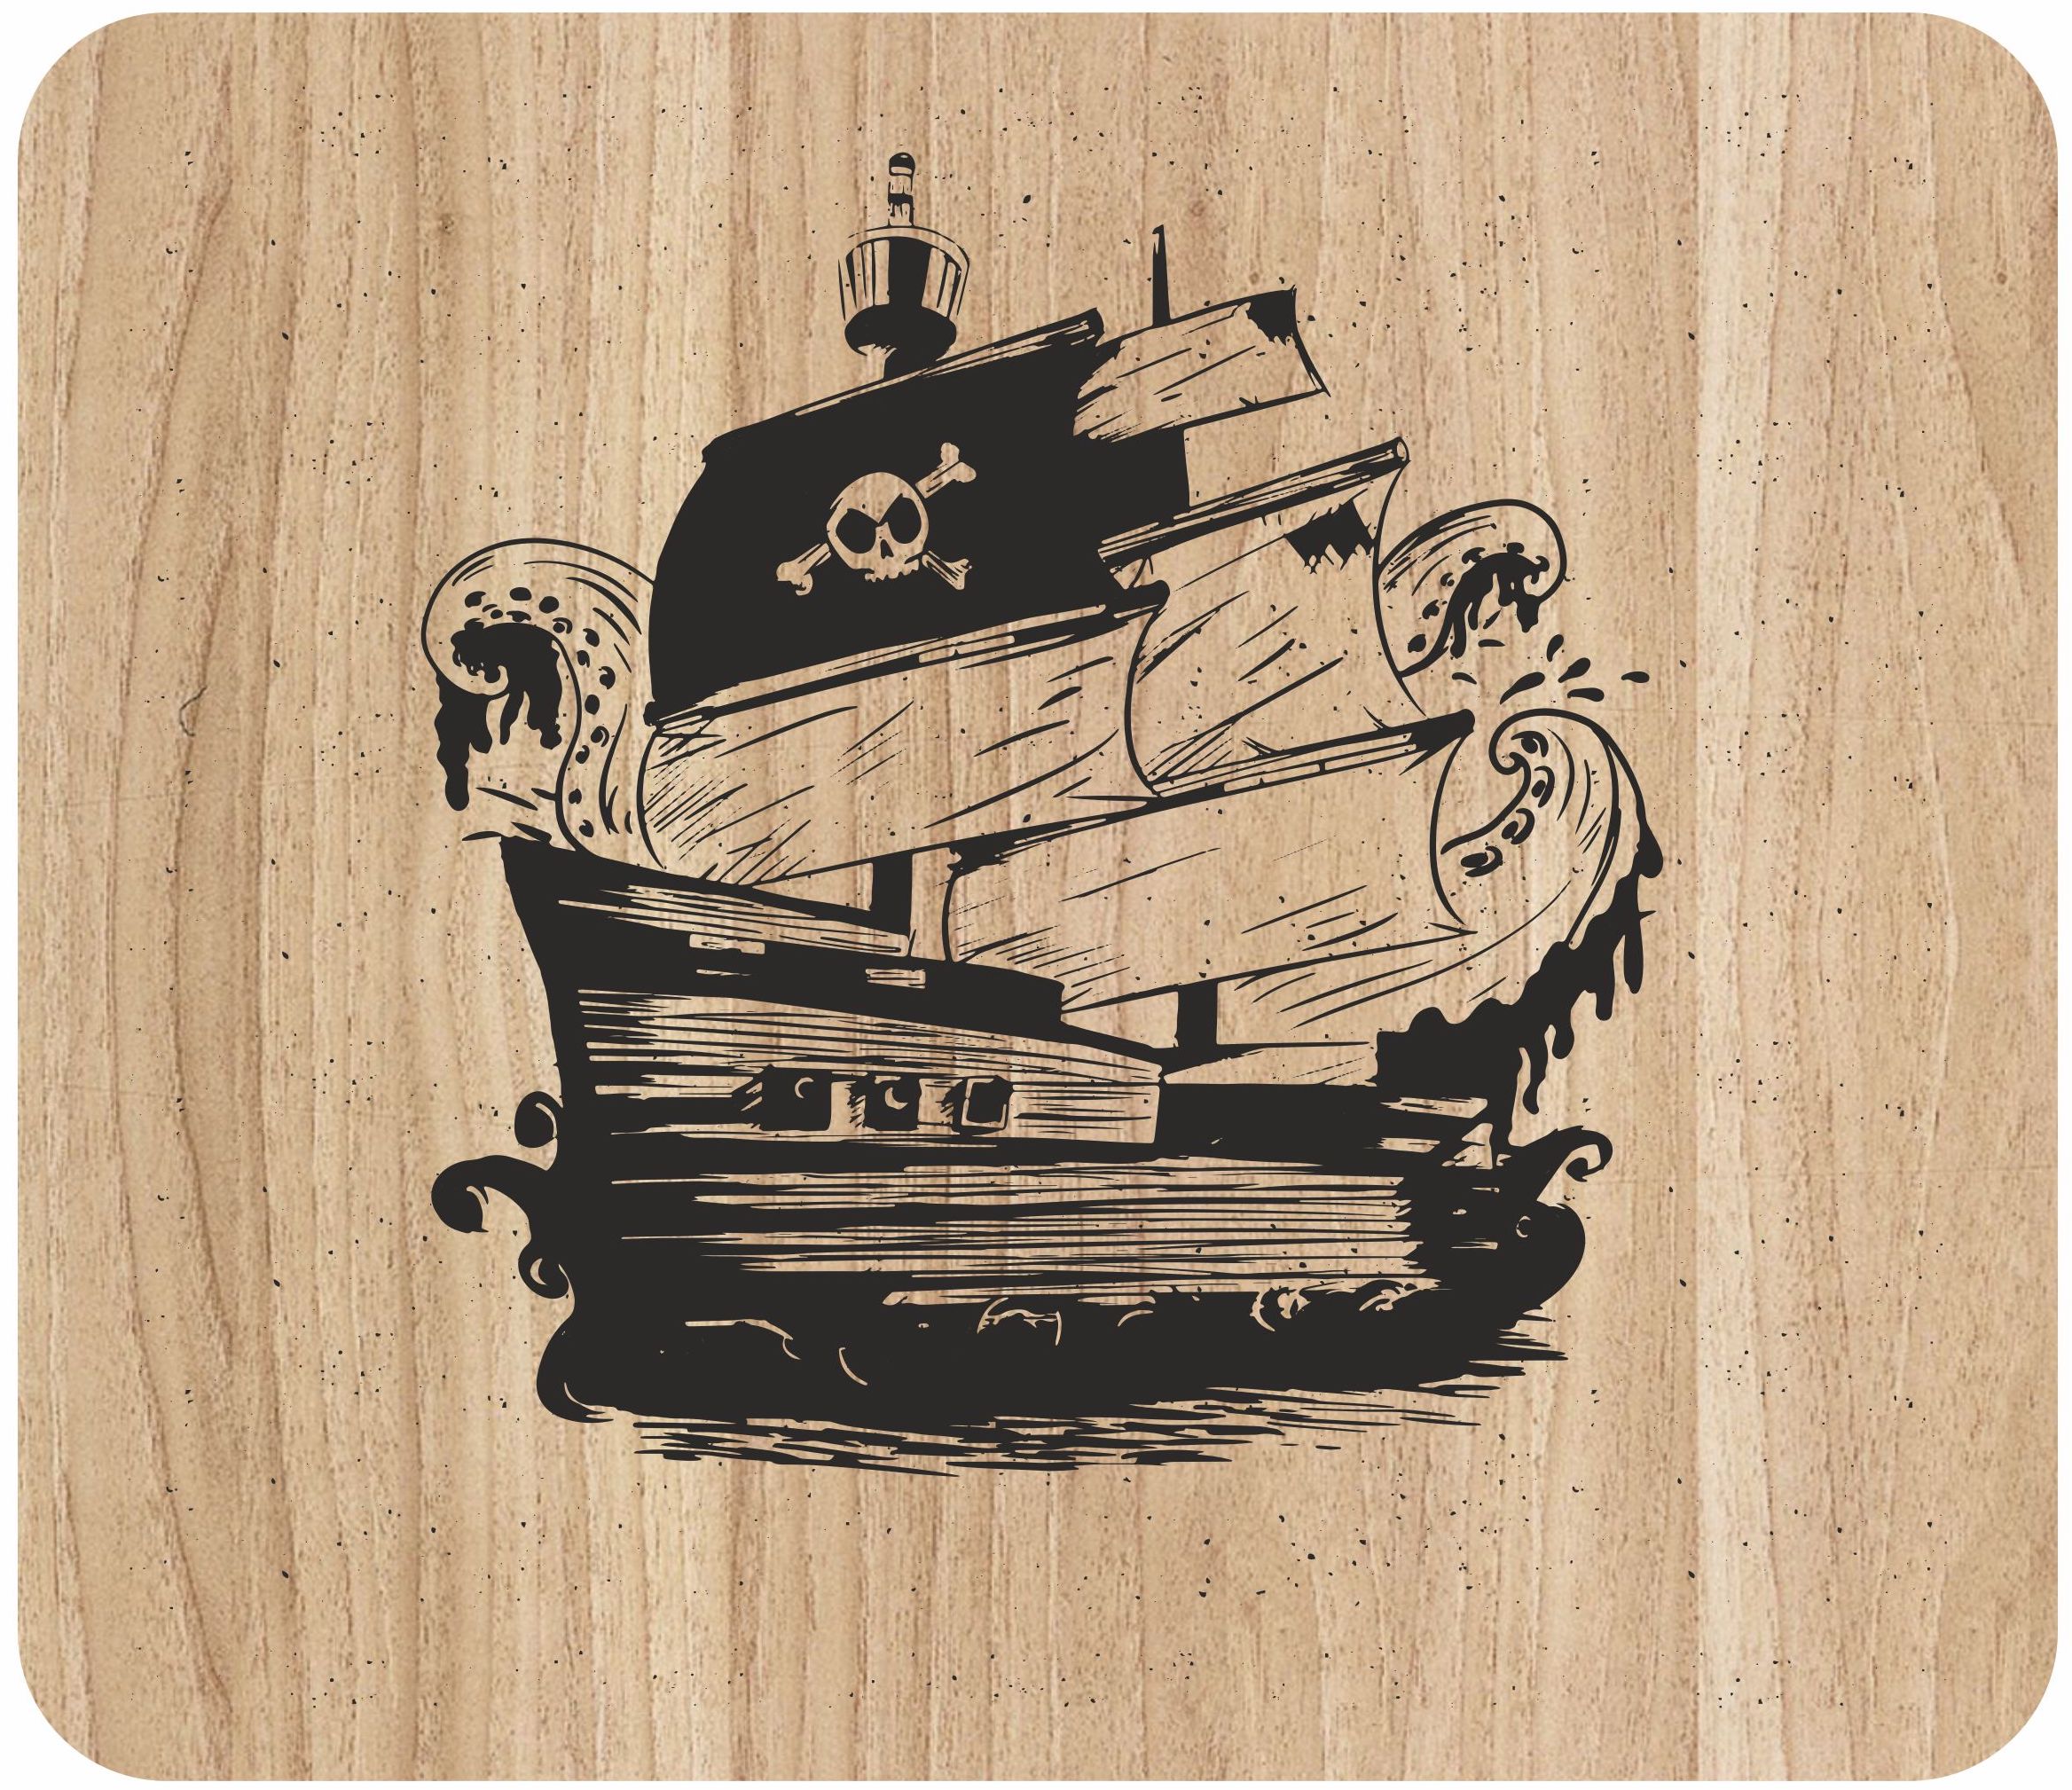 Arte de barco pirata de grabado láser en tabla de cortar